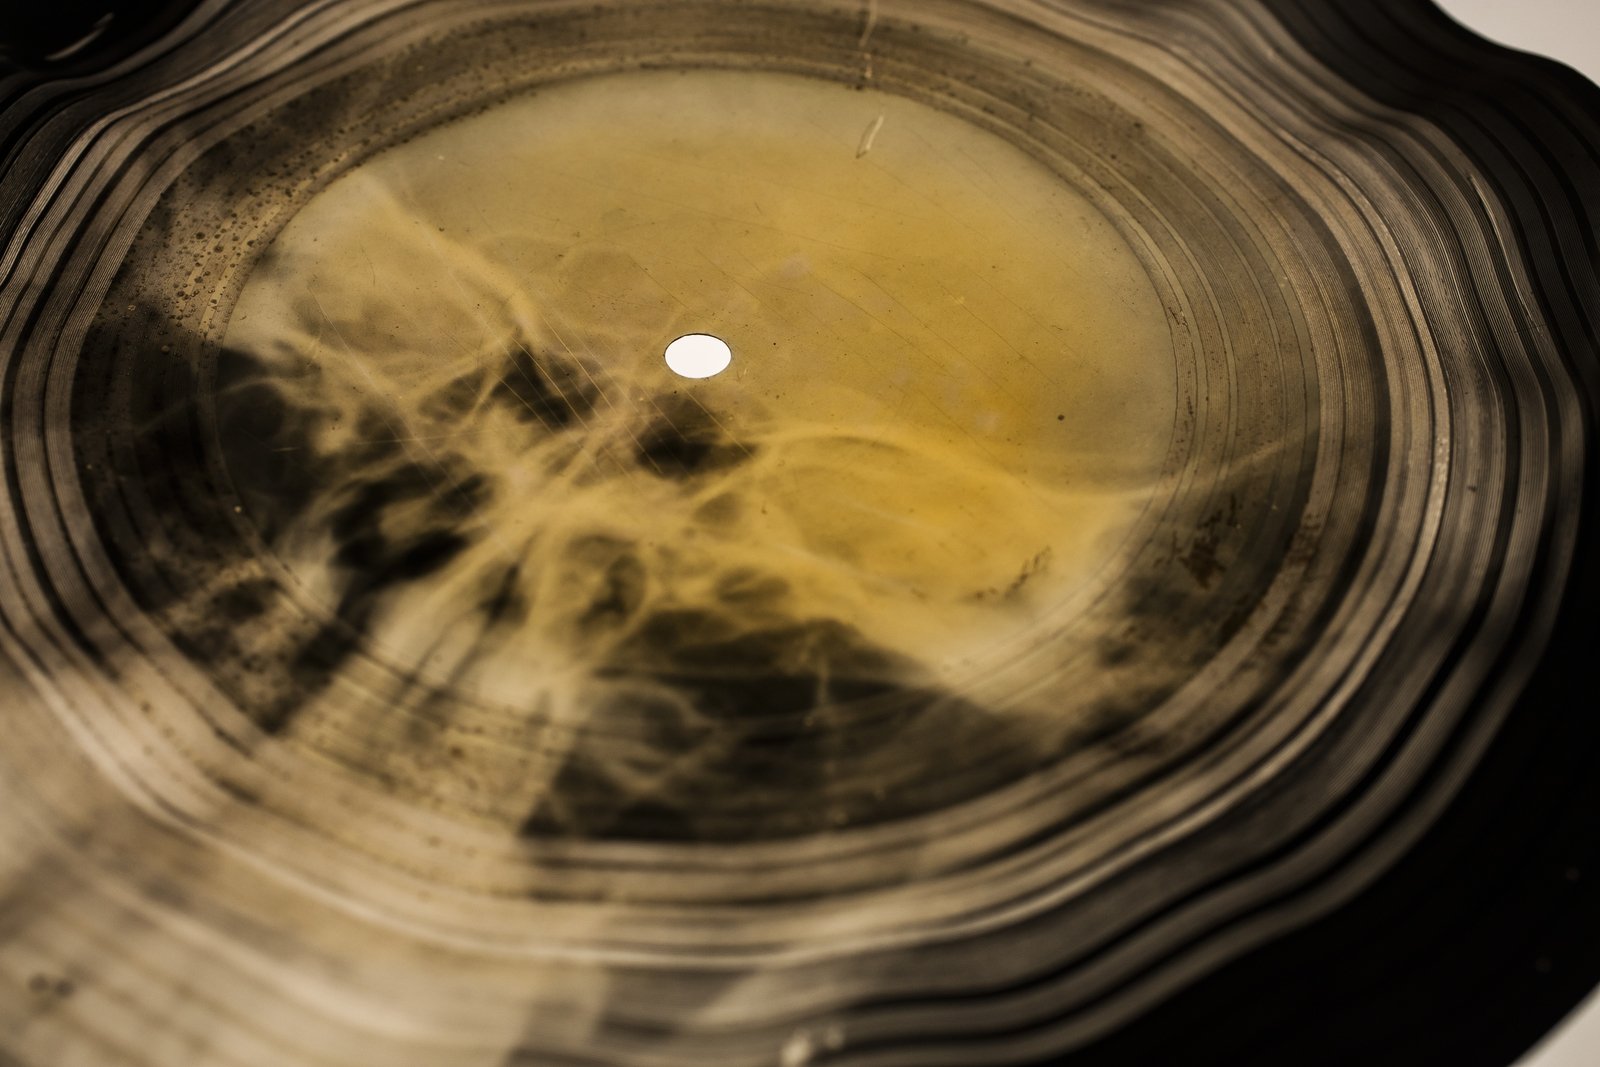 Bone record, detail of damage, 2017C-type print 50 x 74 cmСourtesy X-Ray Audio, London